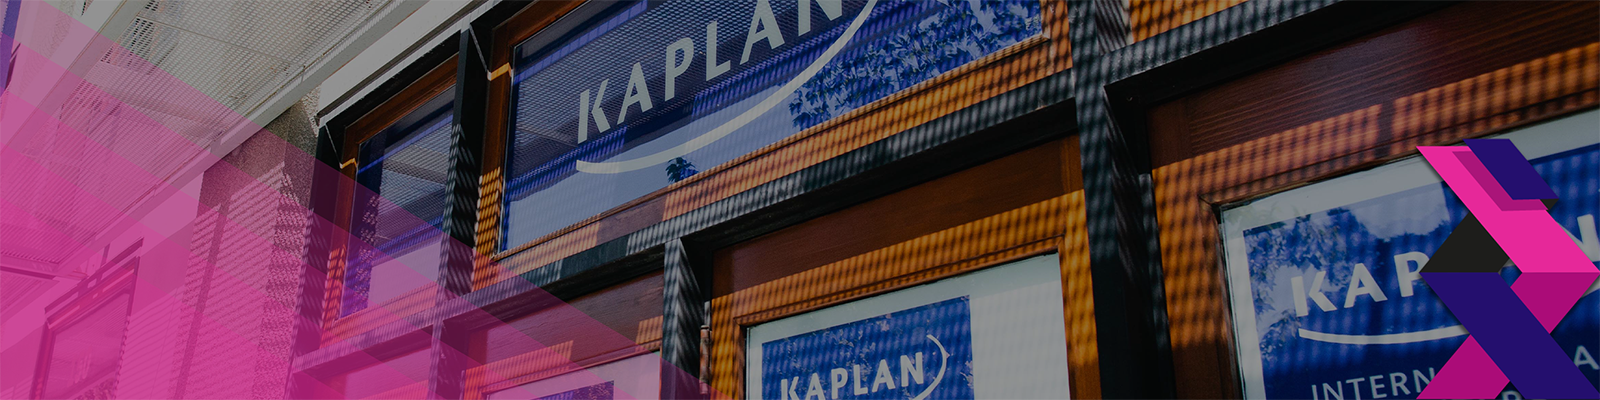 Kaplan International Languages - Chicago görseli